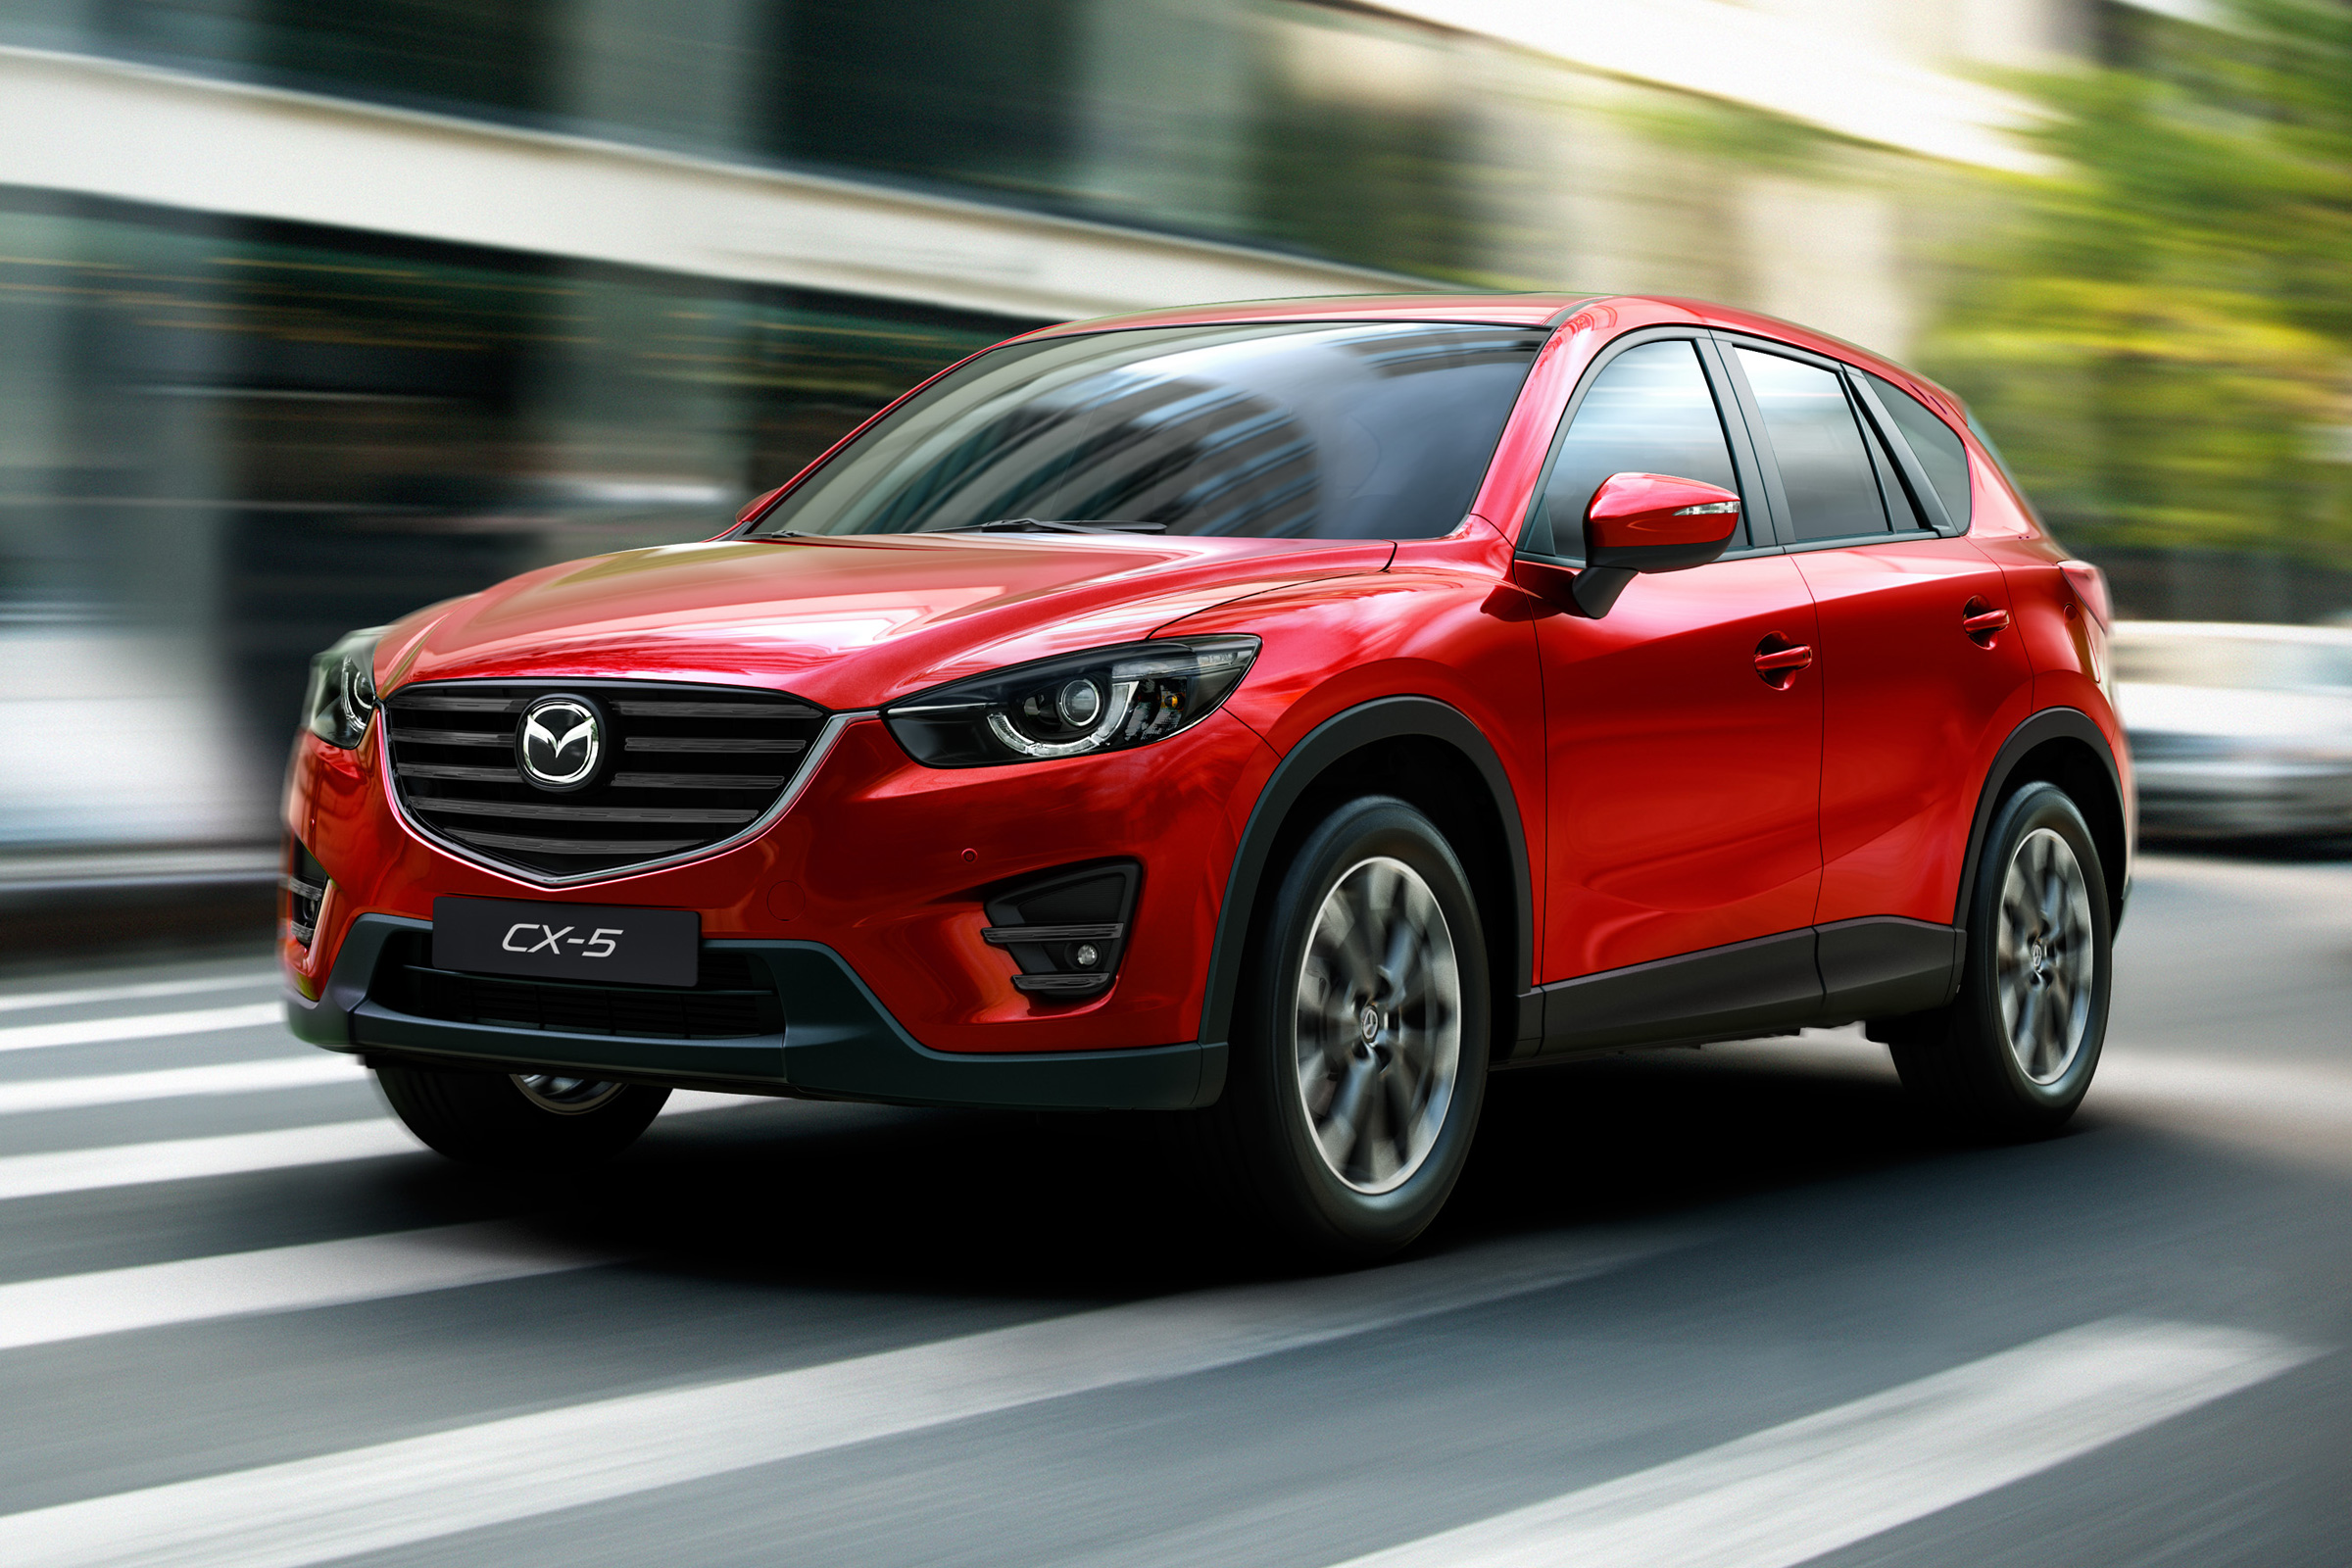 New 2015 Mazda CX5 revealed Carbuyer